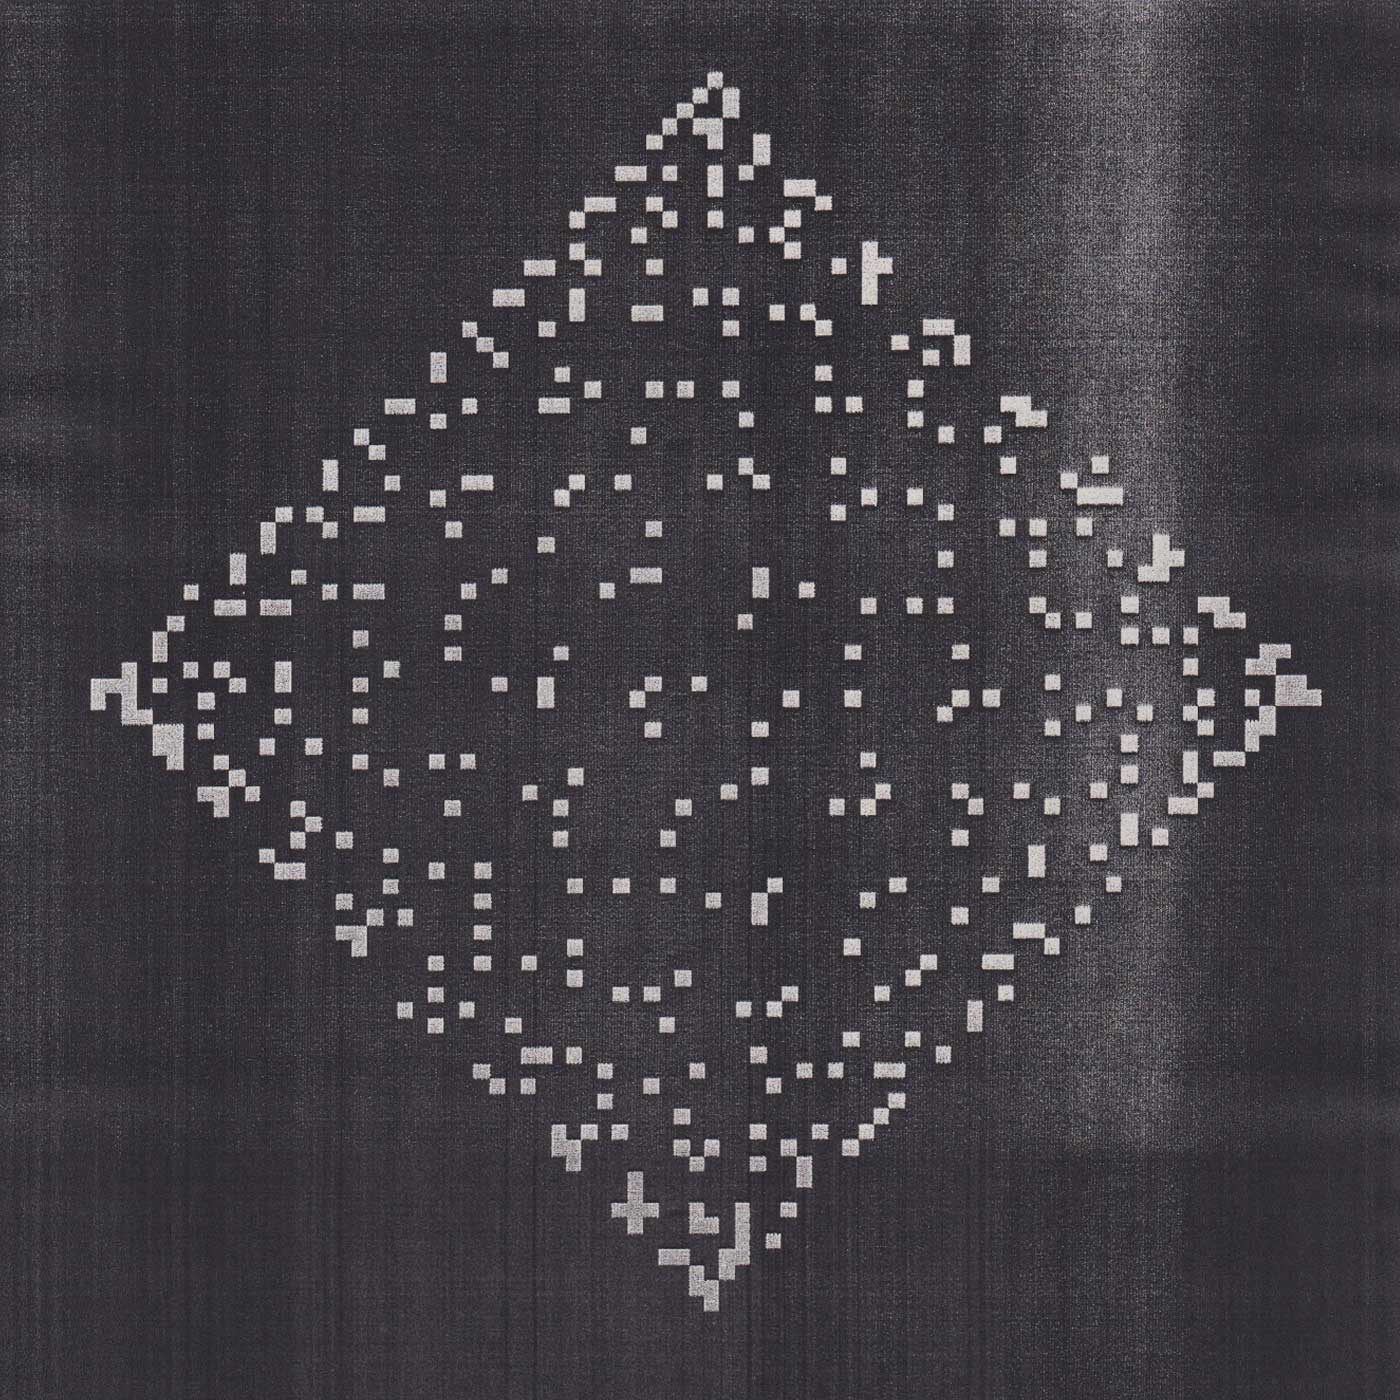 Photocopy of a diamond-shaped goniometer on a dark background.